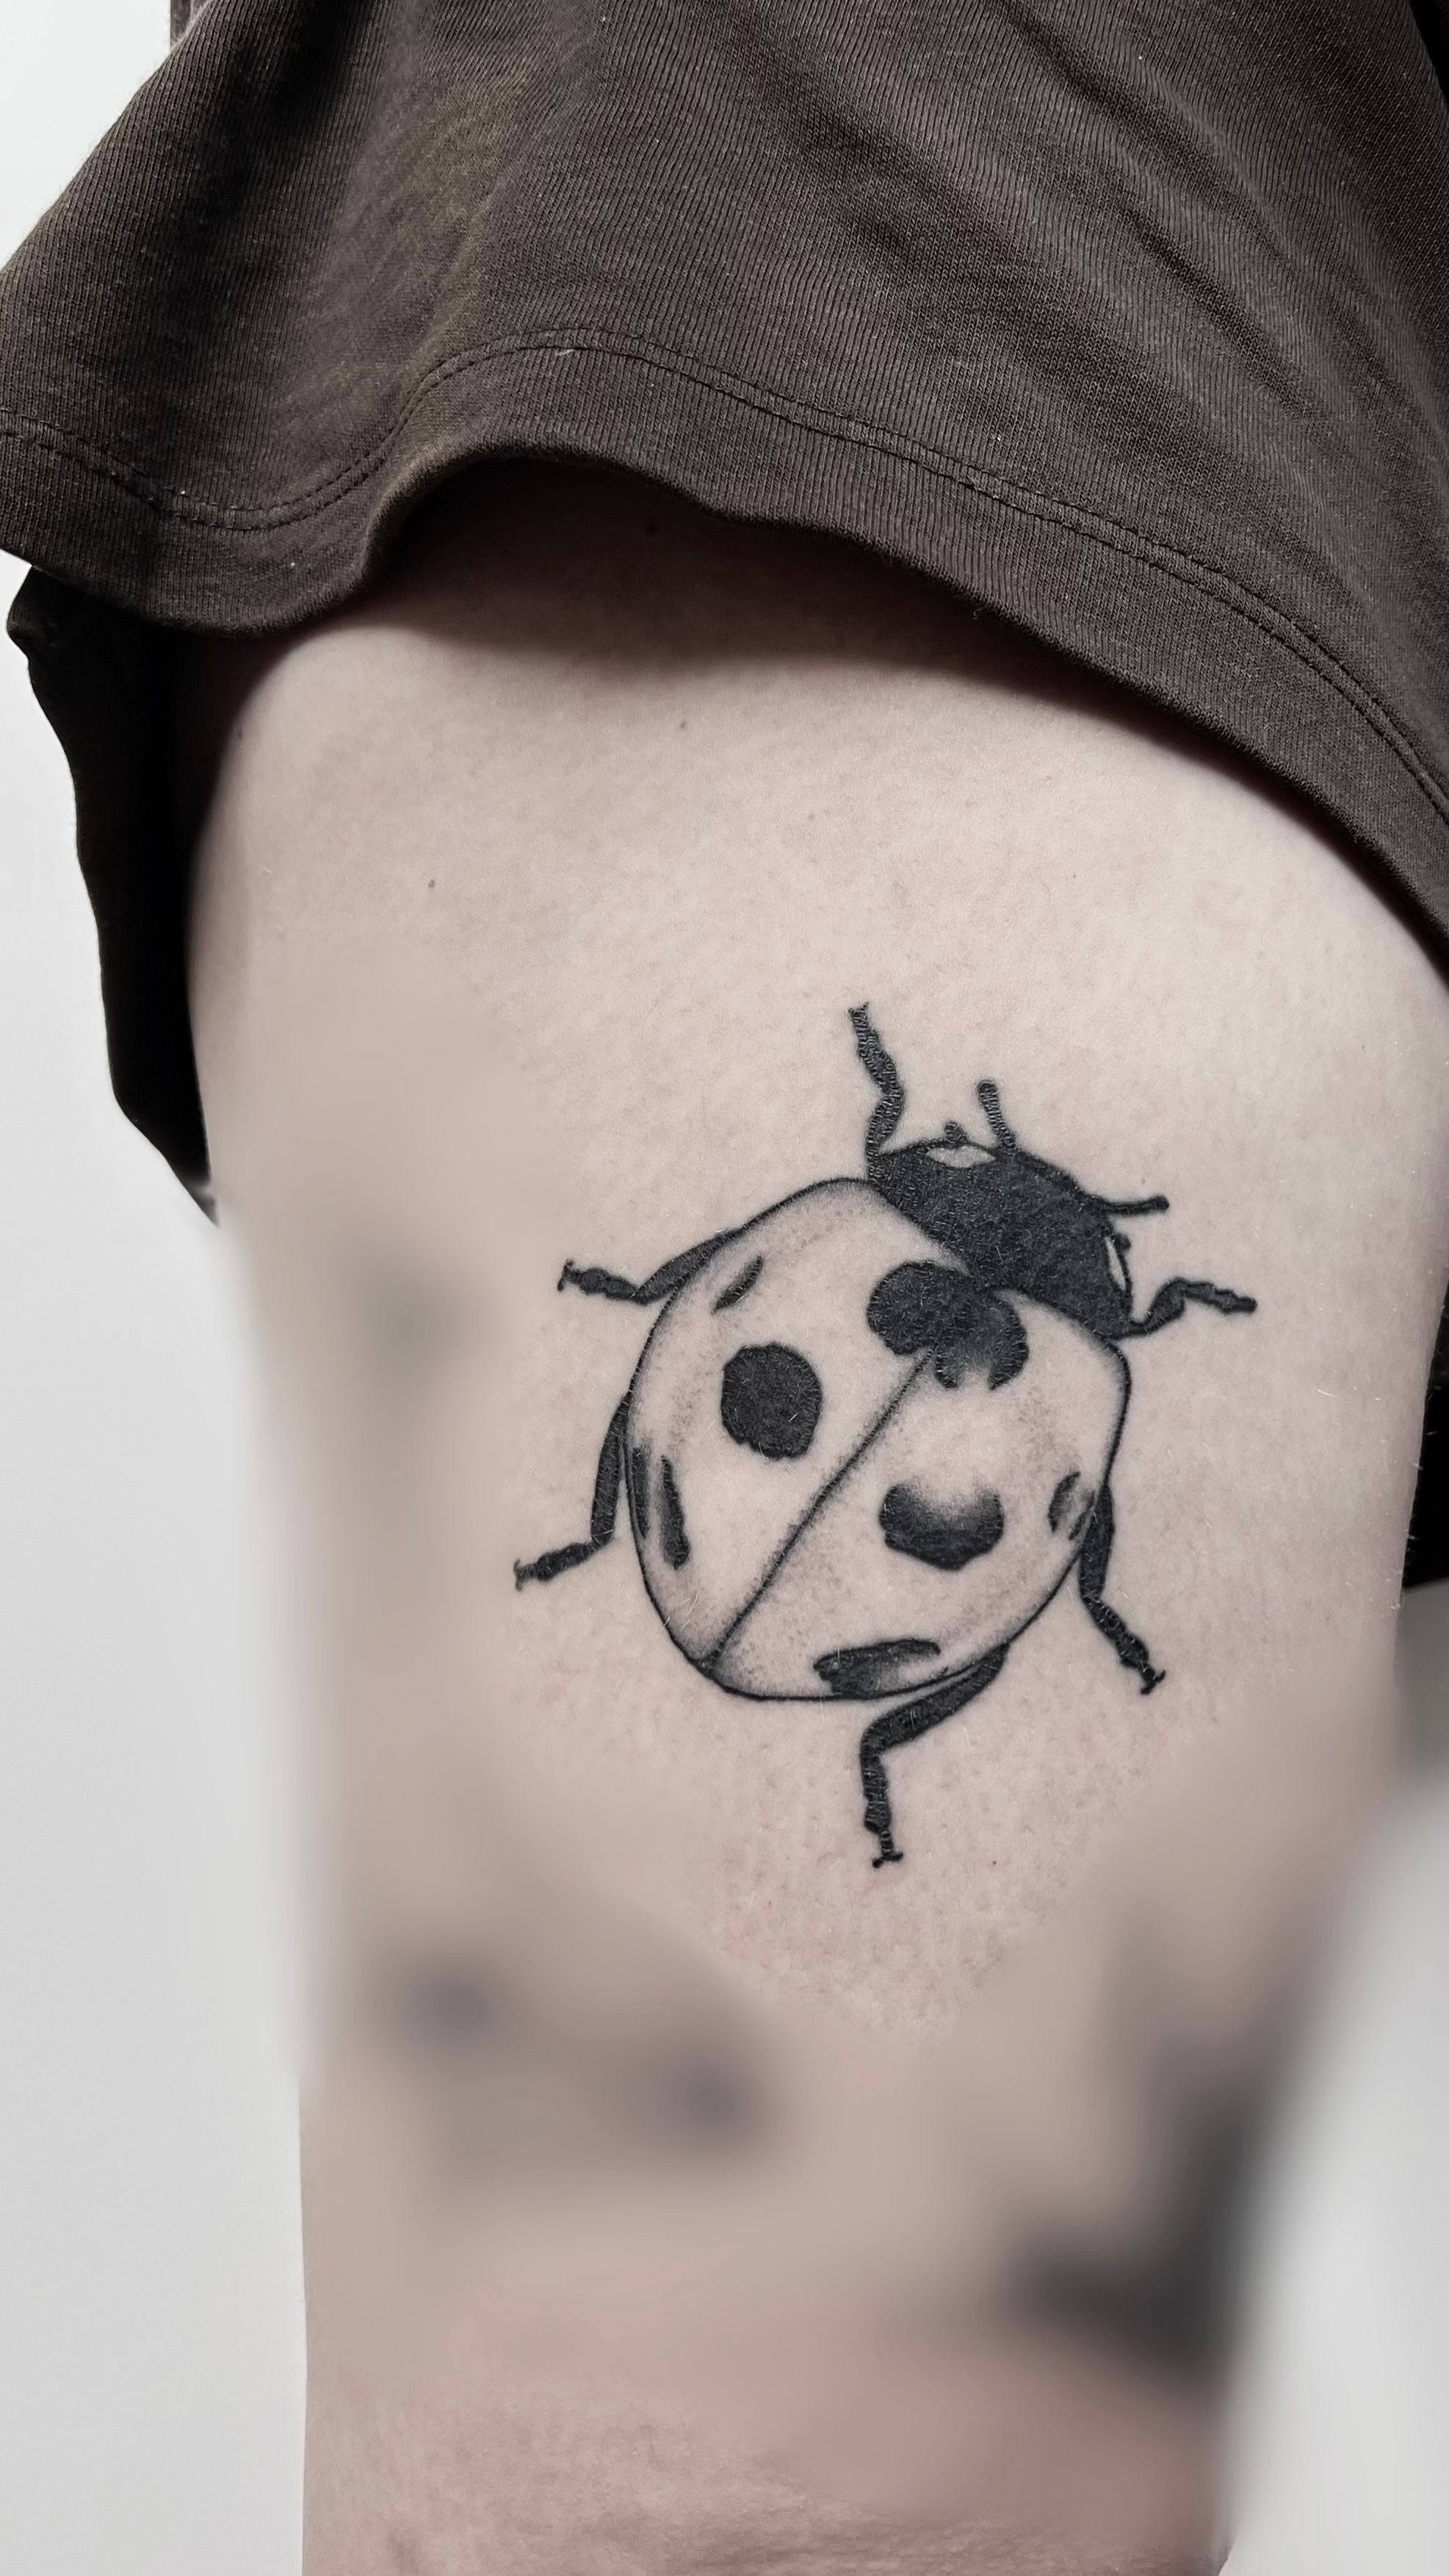 ladybug tattoo by Castigliani on DeviantArt